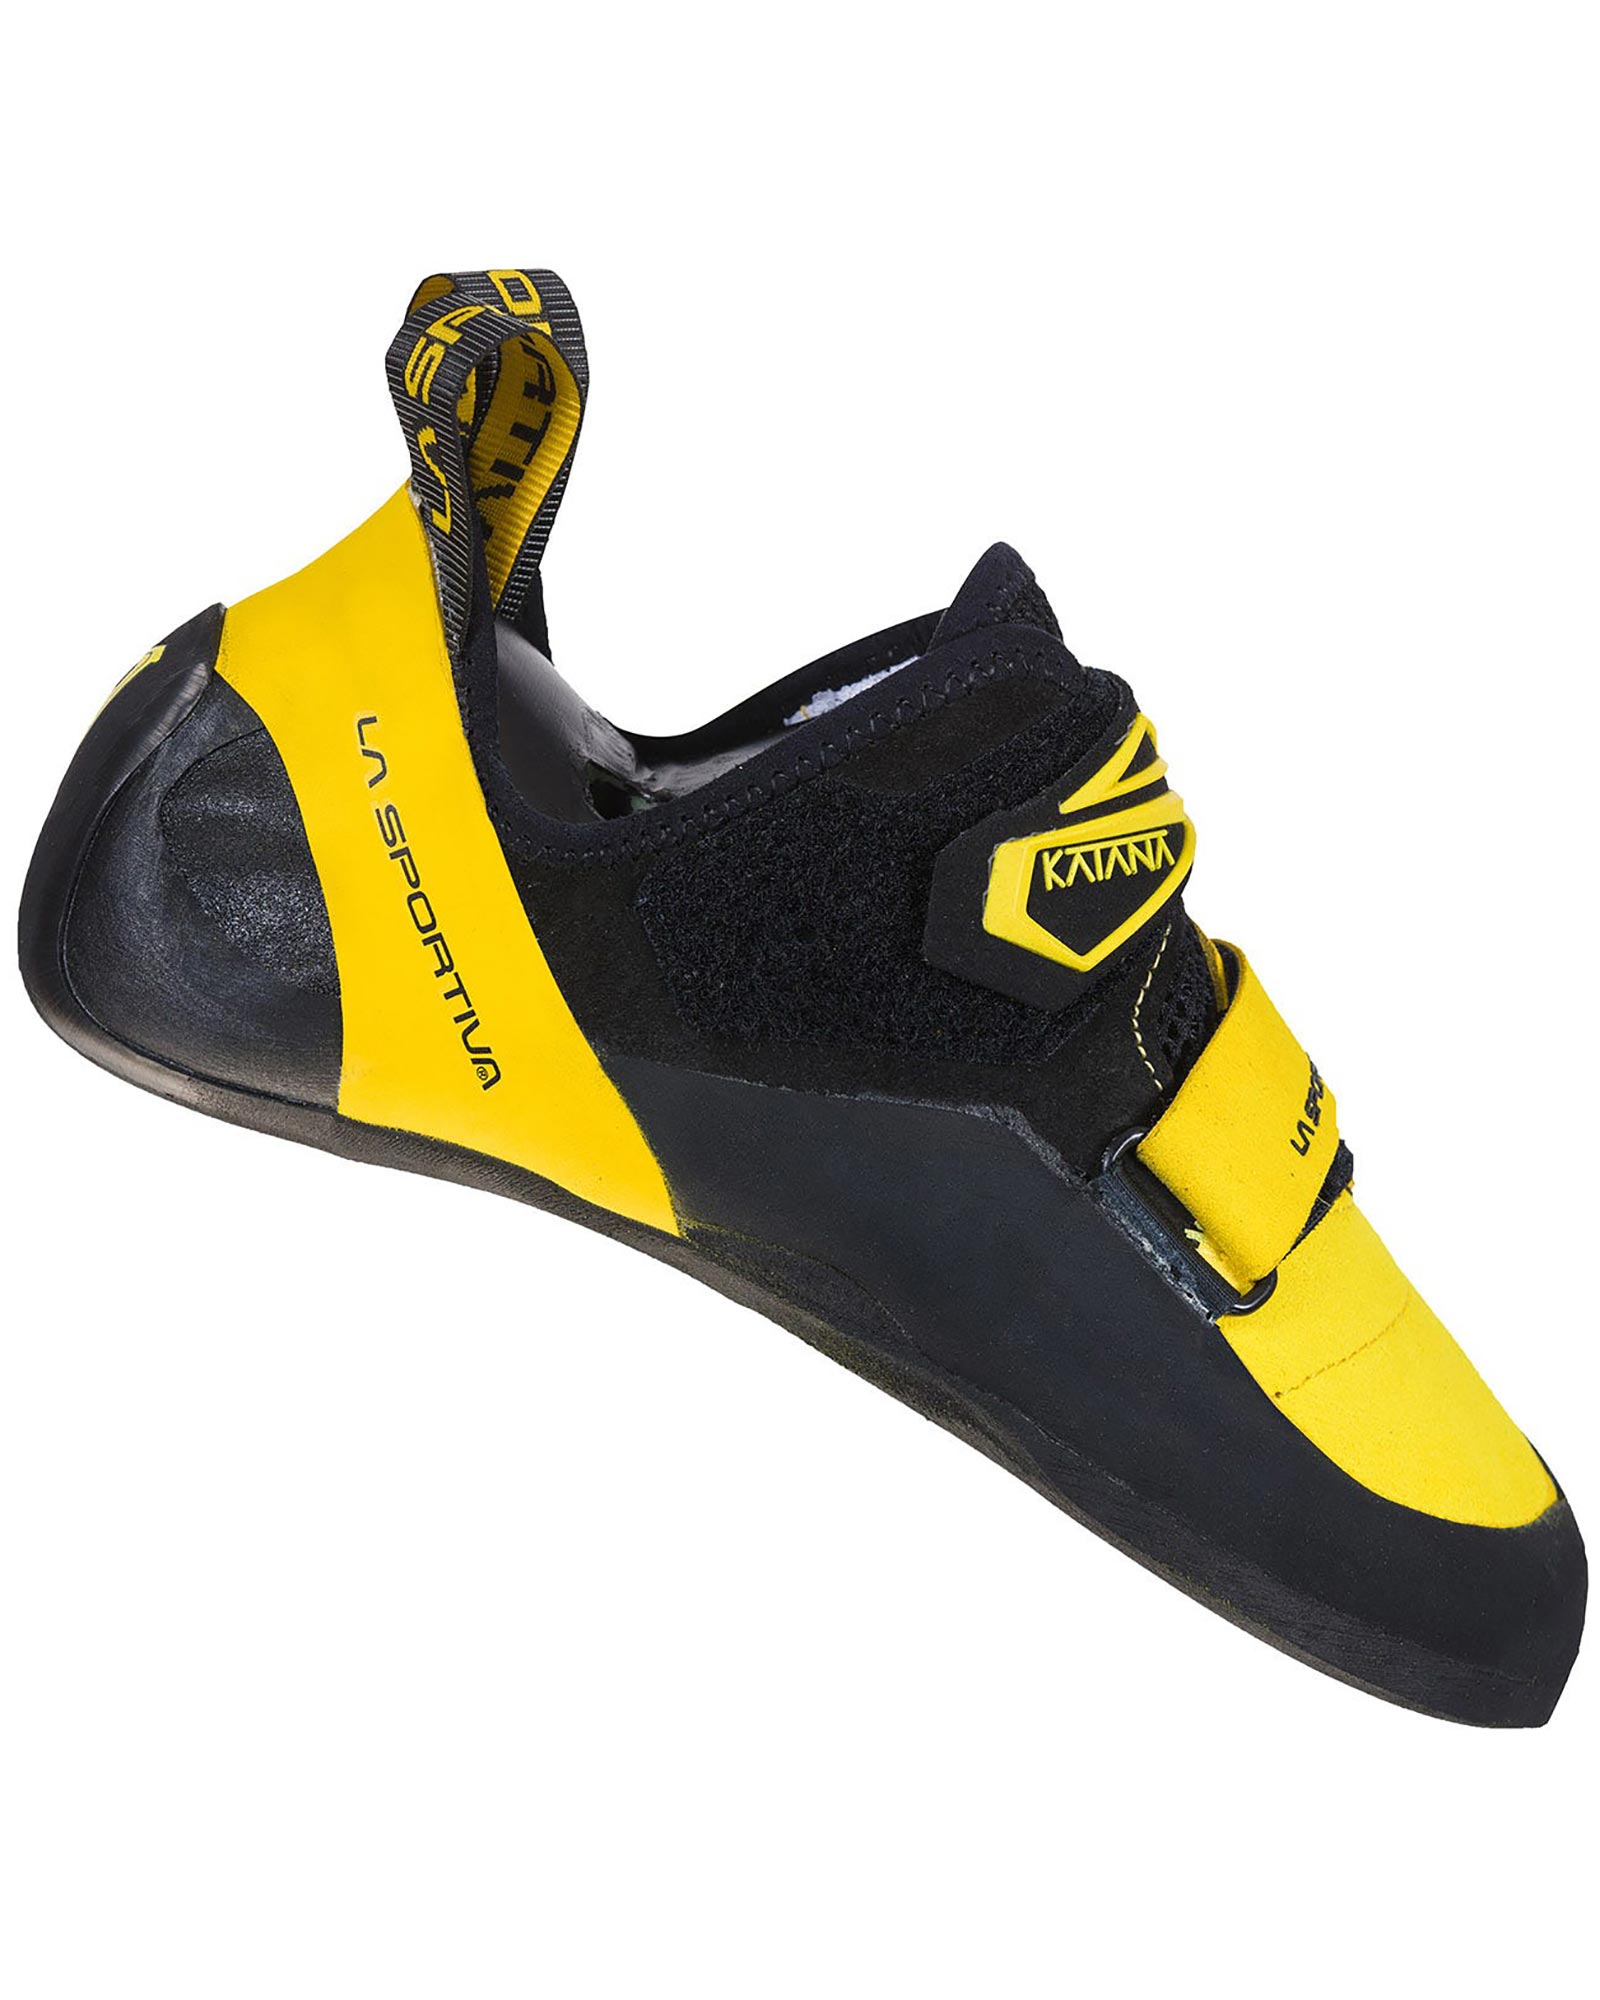 La Sportiva Katana Men’s Shoes - Yellow/Black EU 43